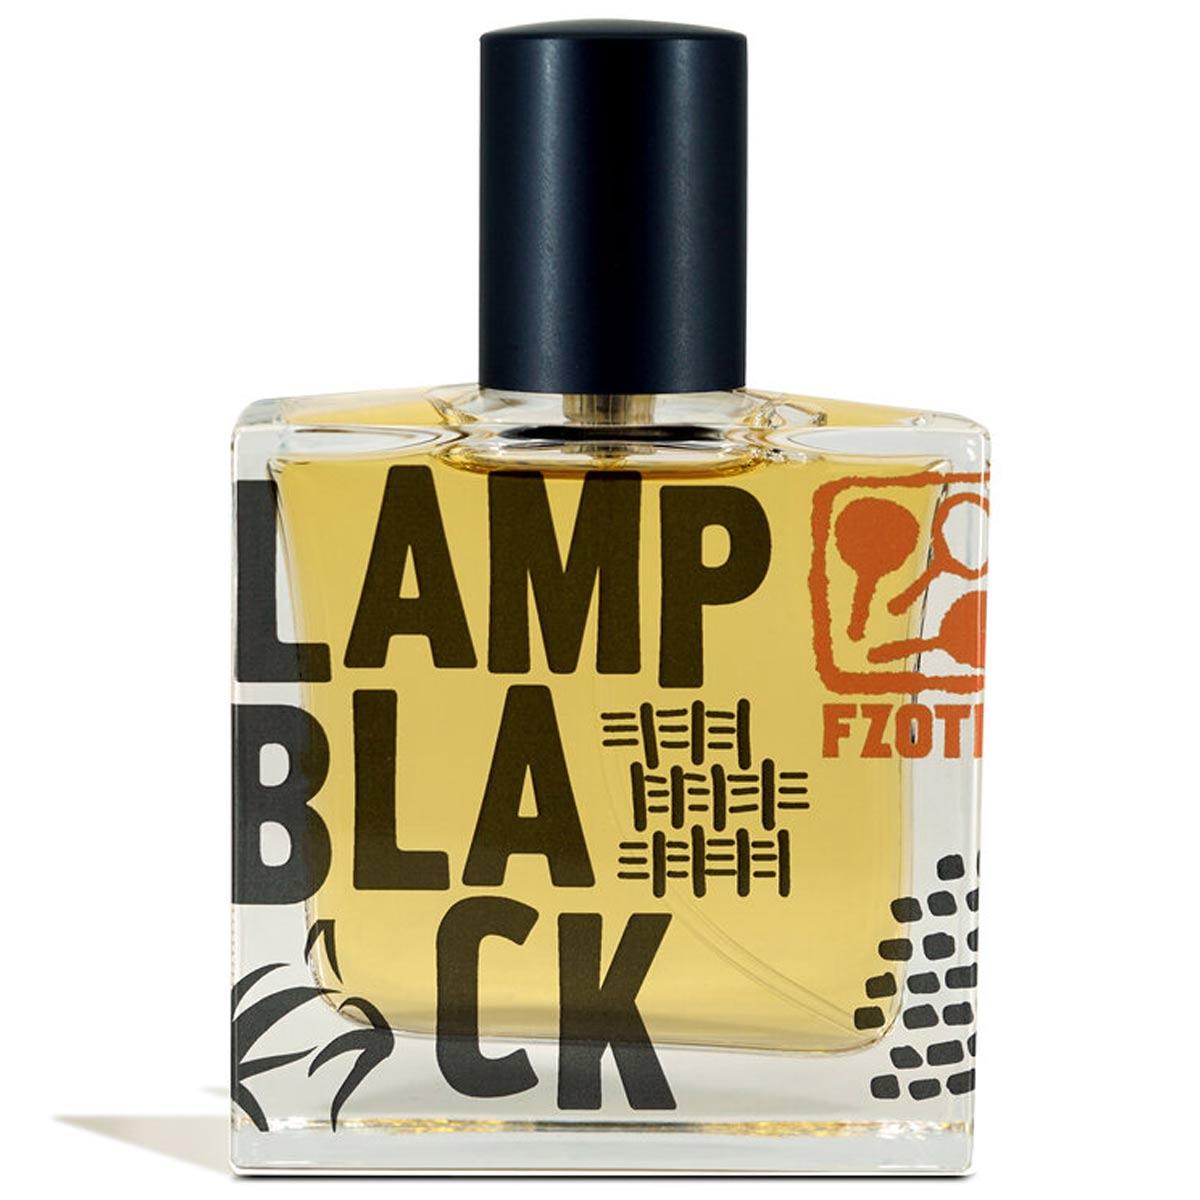 Primary image of Lampblack